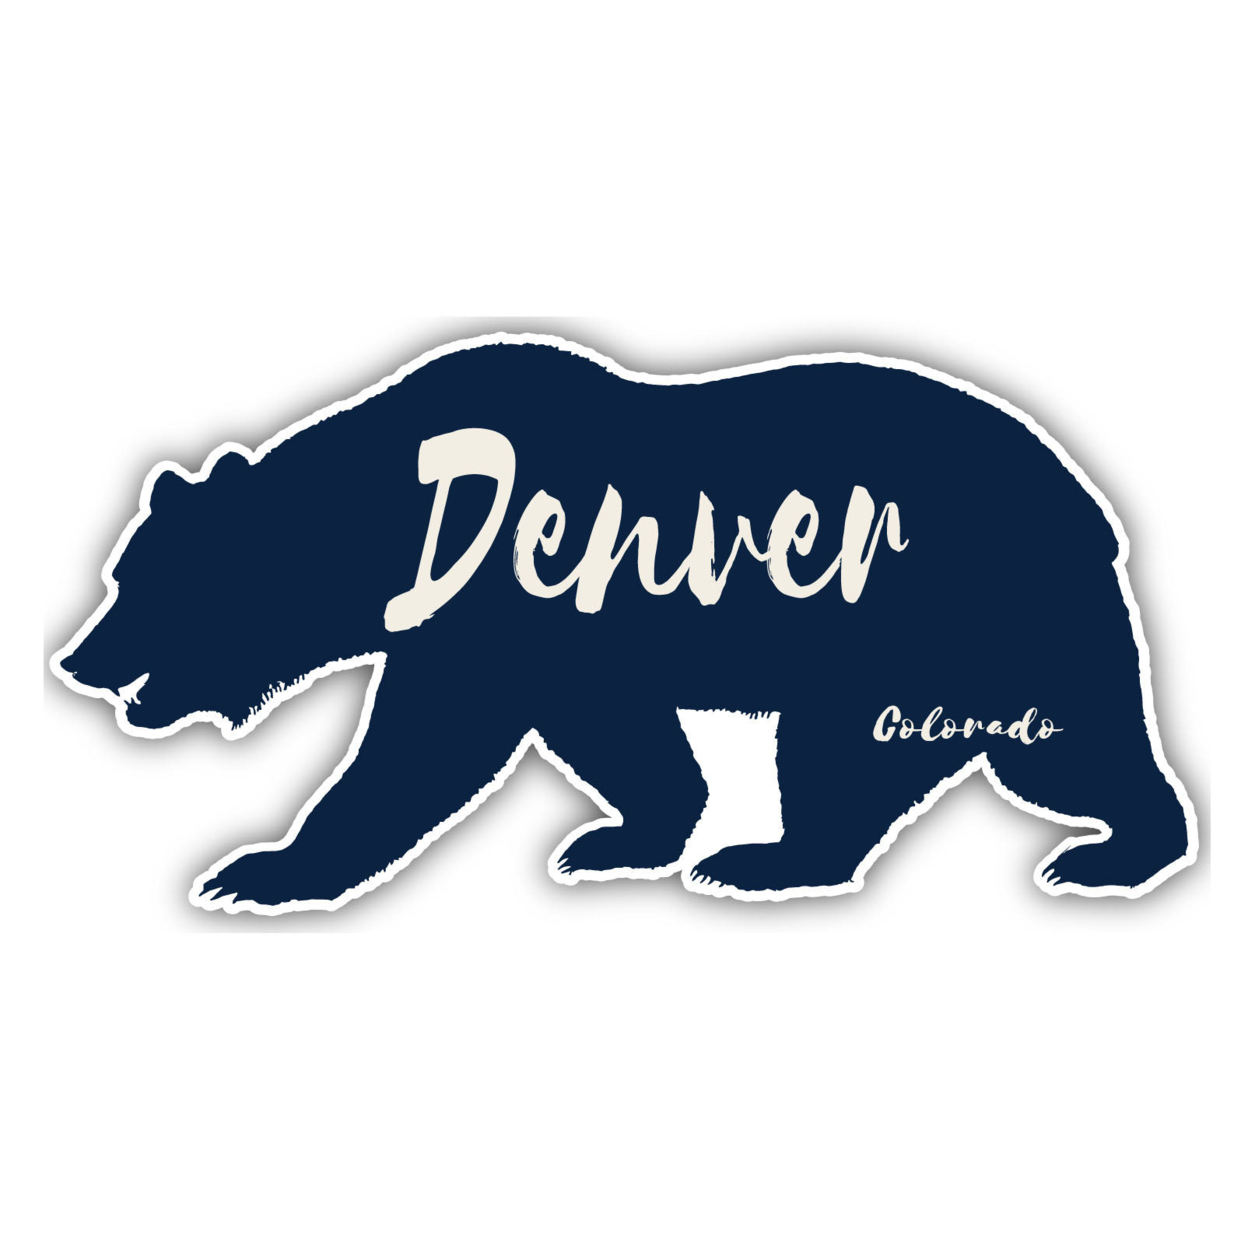 Denver Colorado Souvenir Decorative Stickers (Choose Theme And Size) - 4-Pack, 8-Inch, Tent